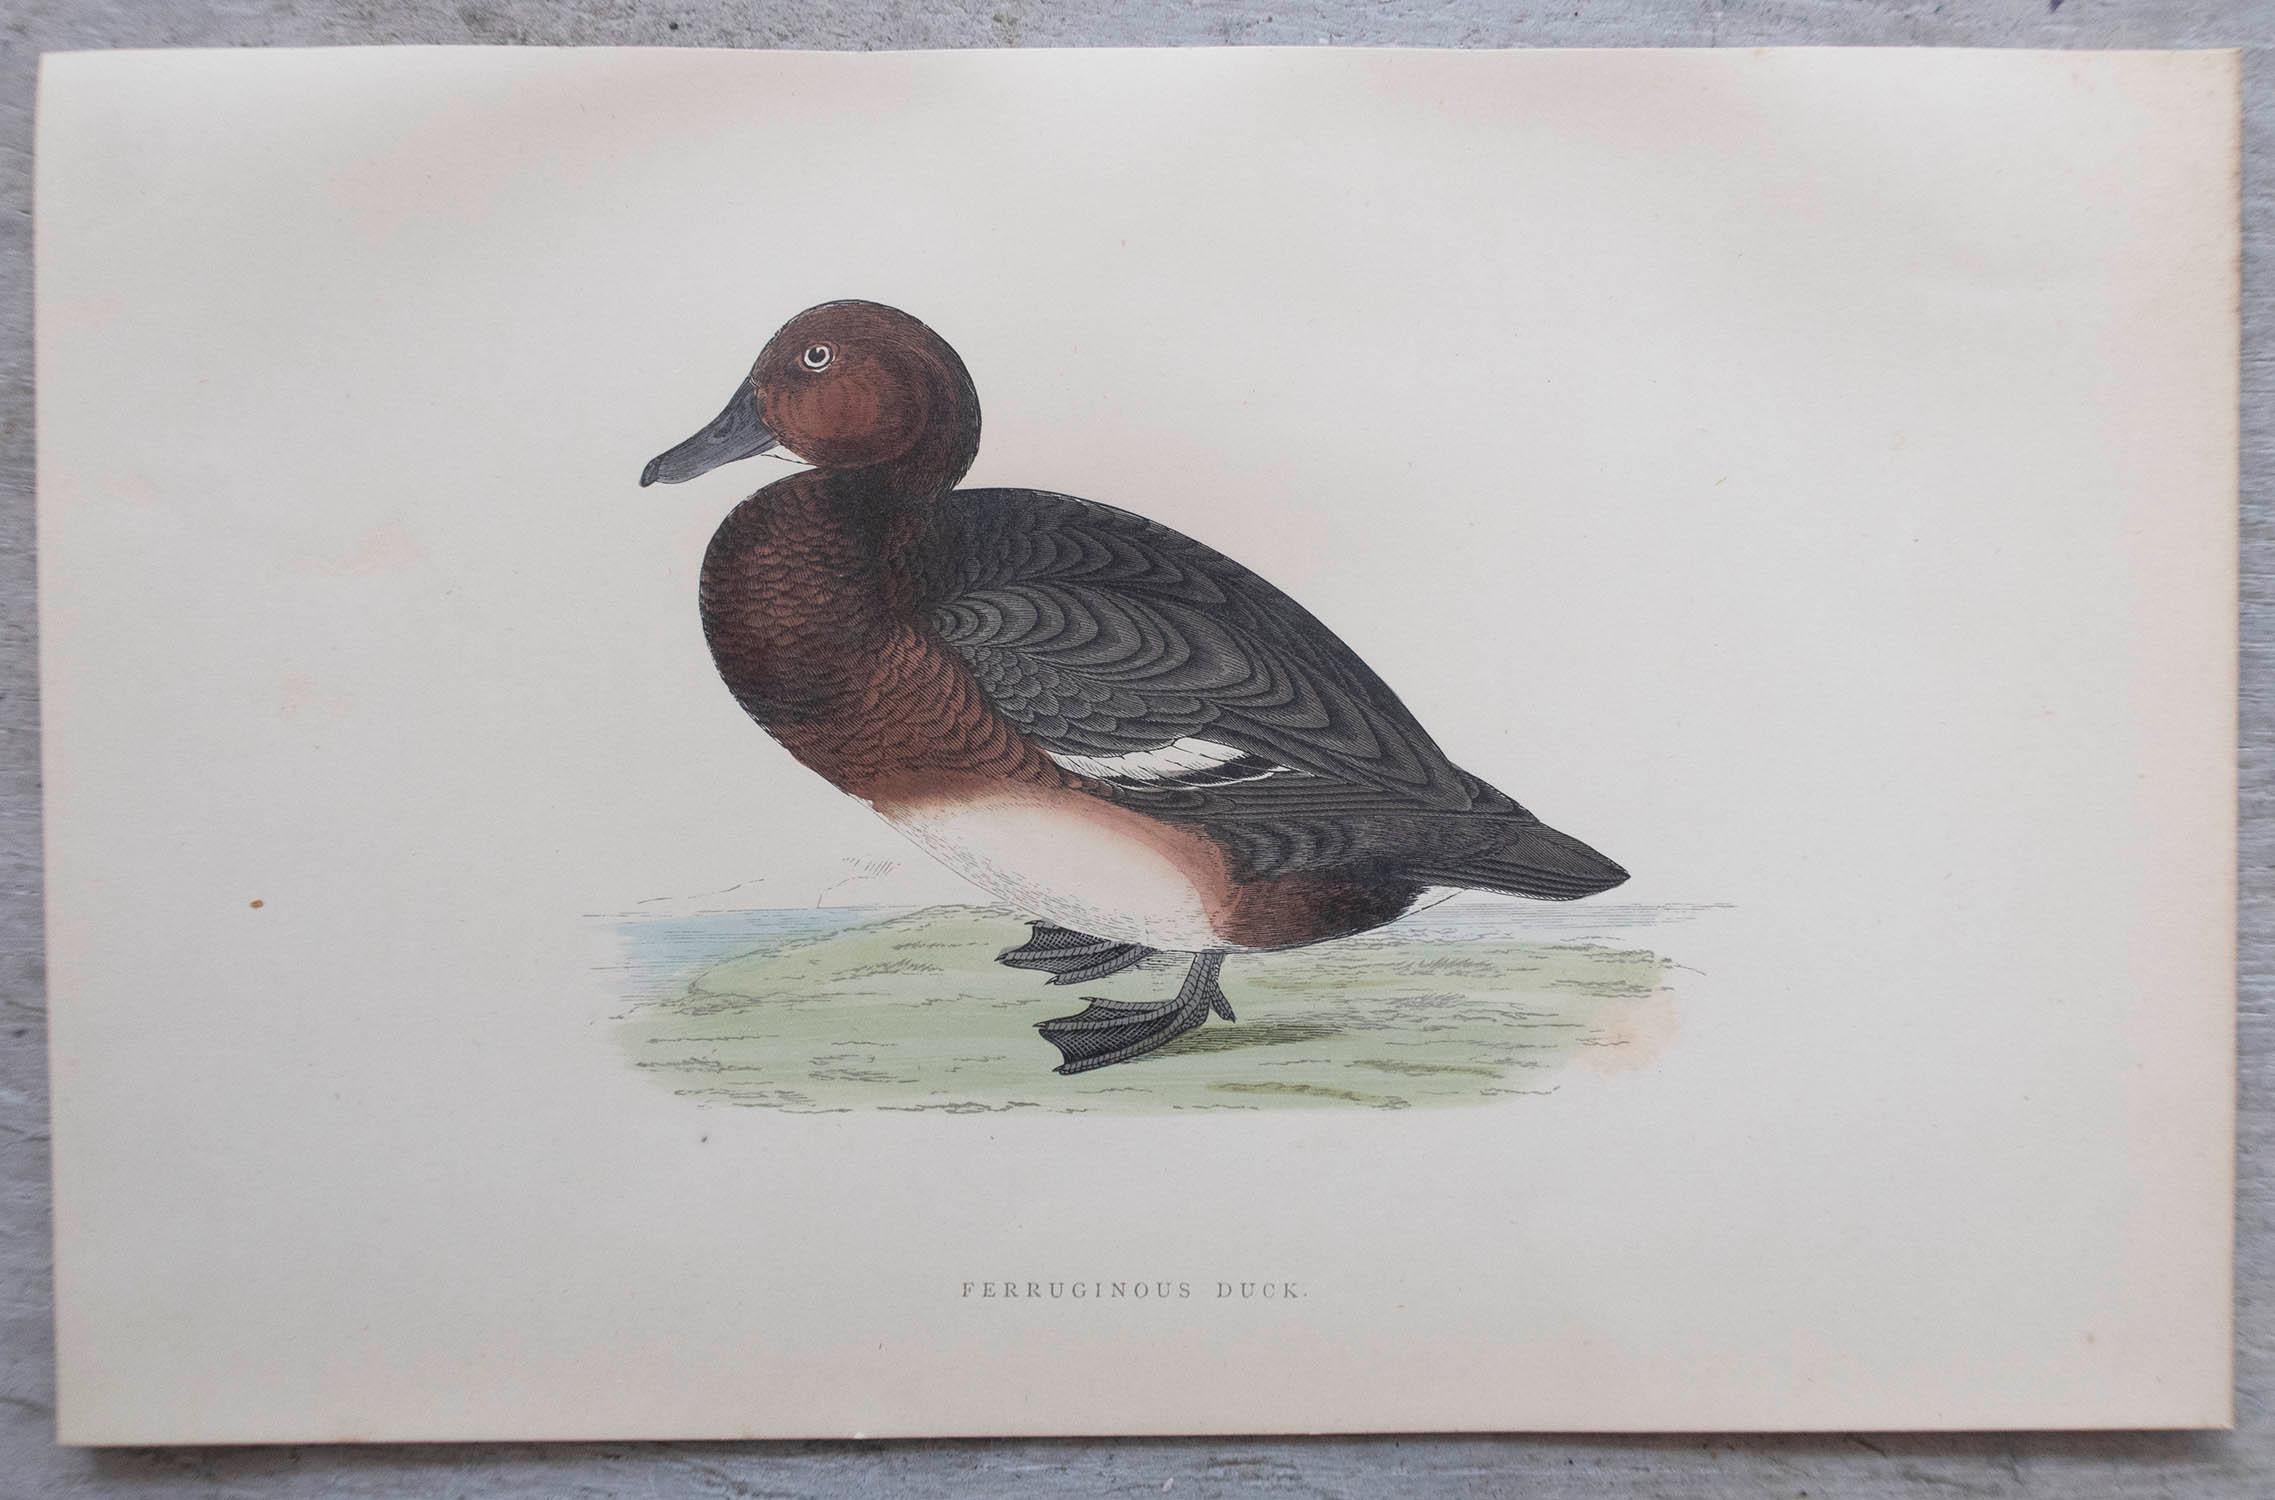 Set of 12 Original Antique Prints of Ducks After Francis Lydon, C.1880 For Sale 4